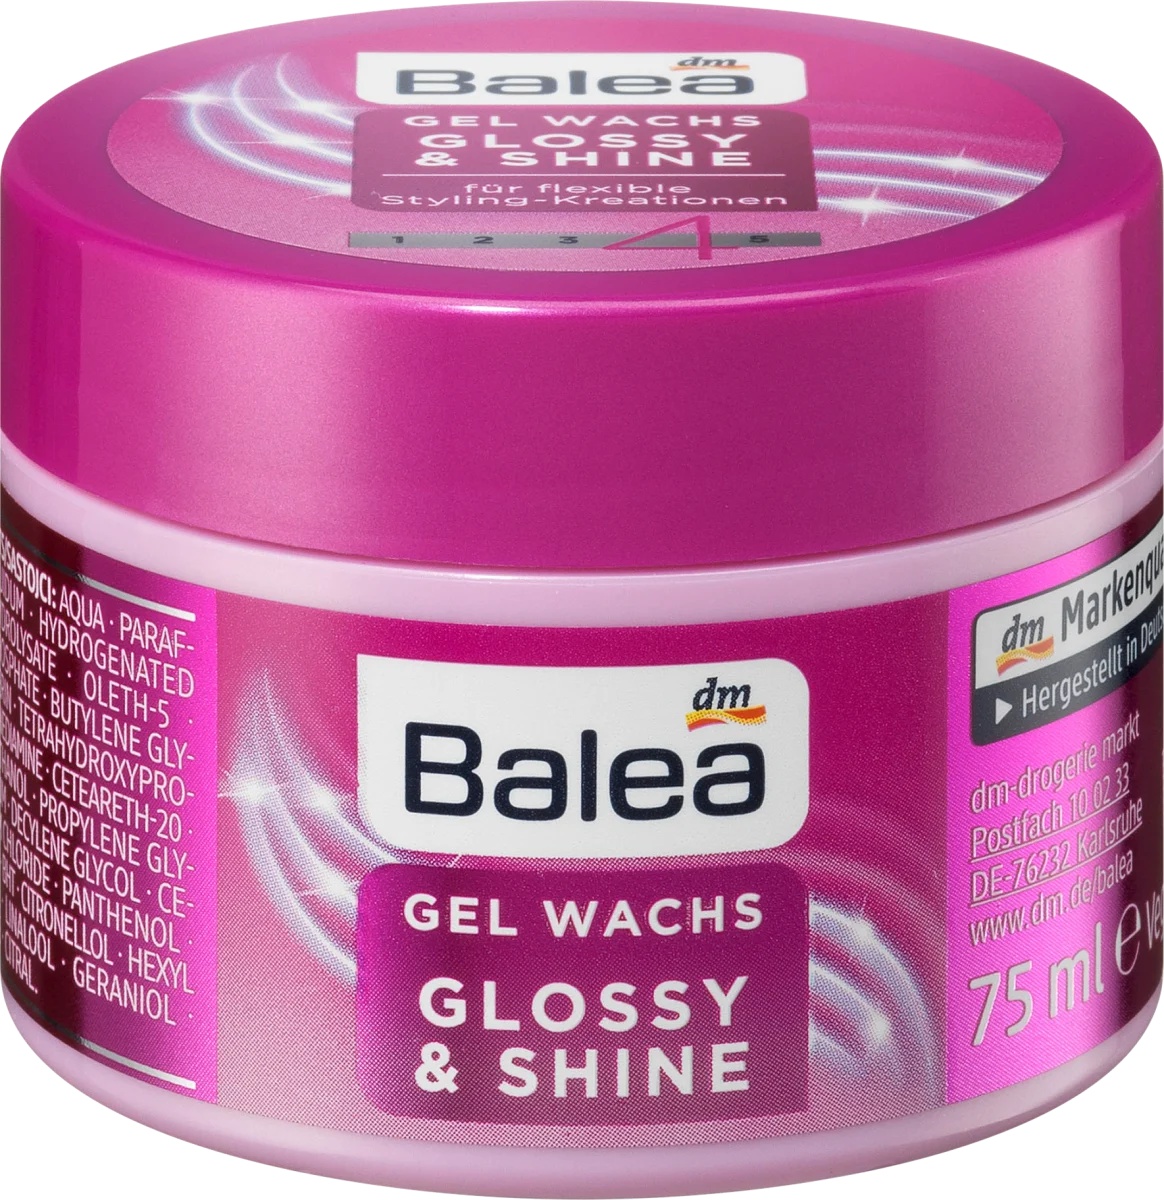 Balea Gel Wachs Glossy & Shine